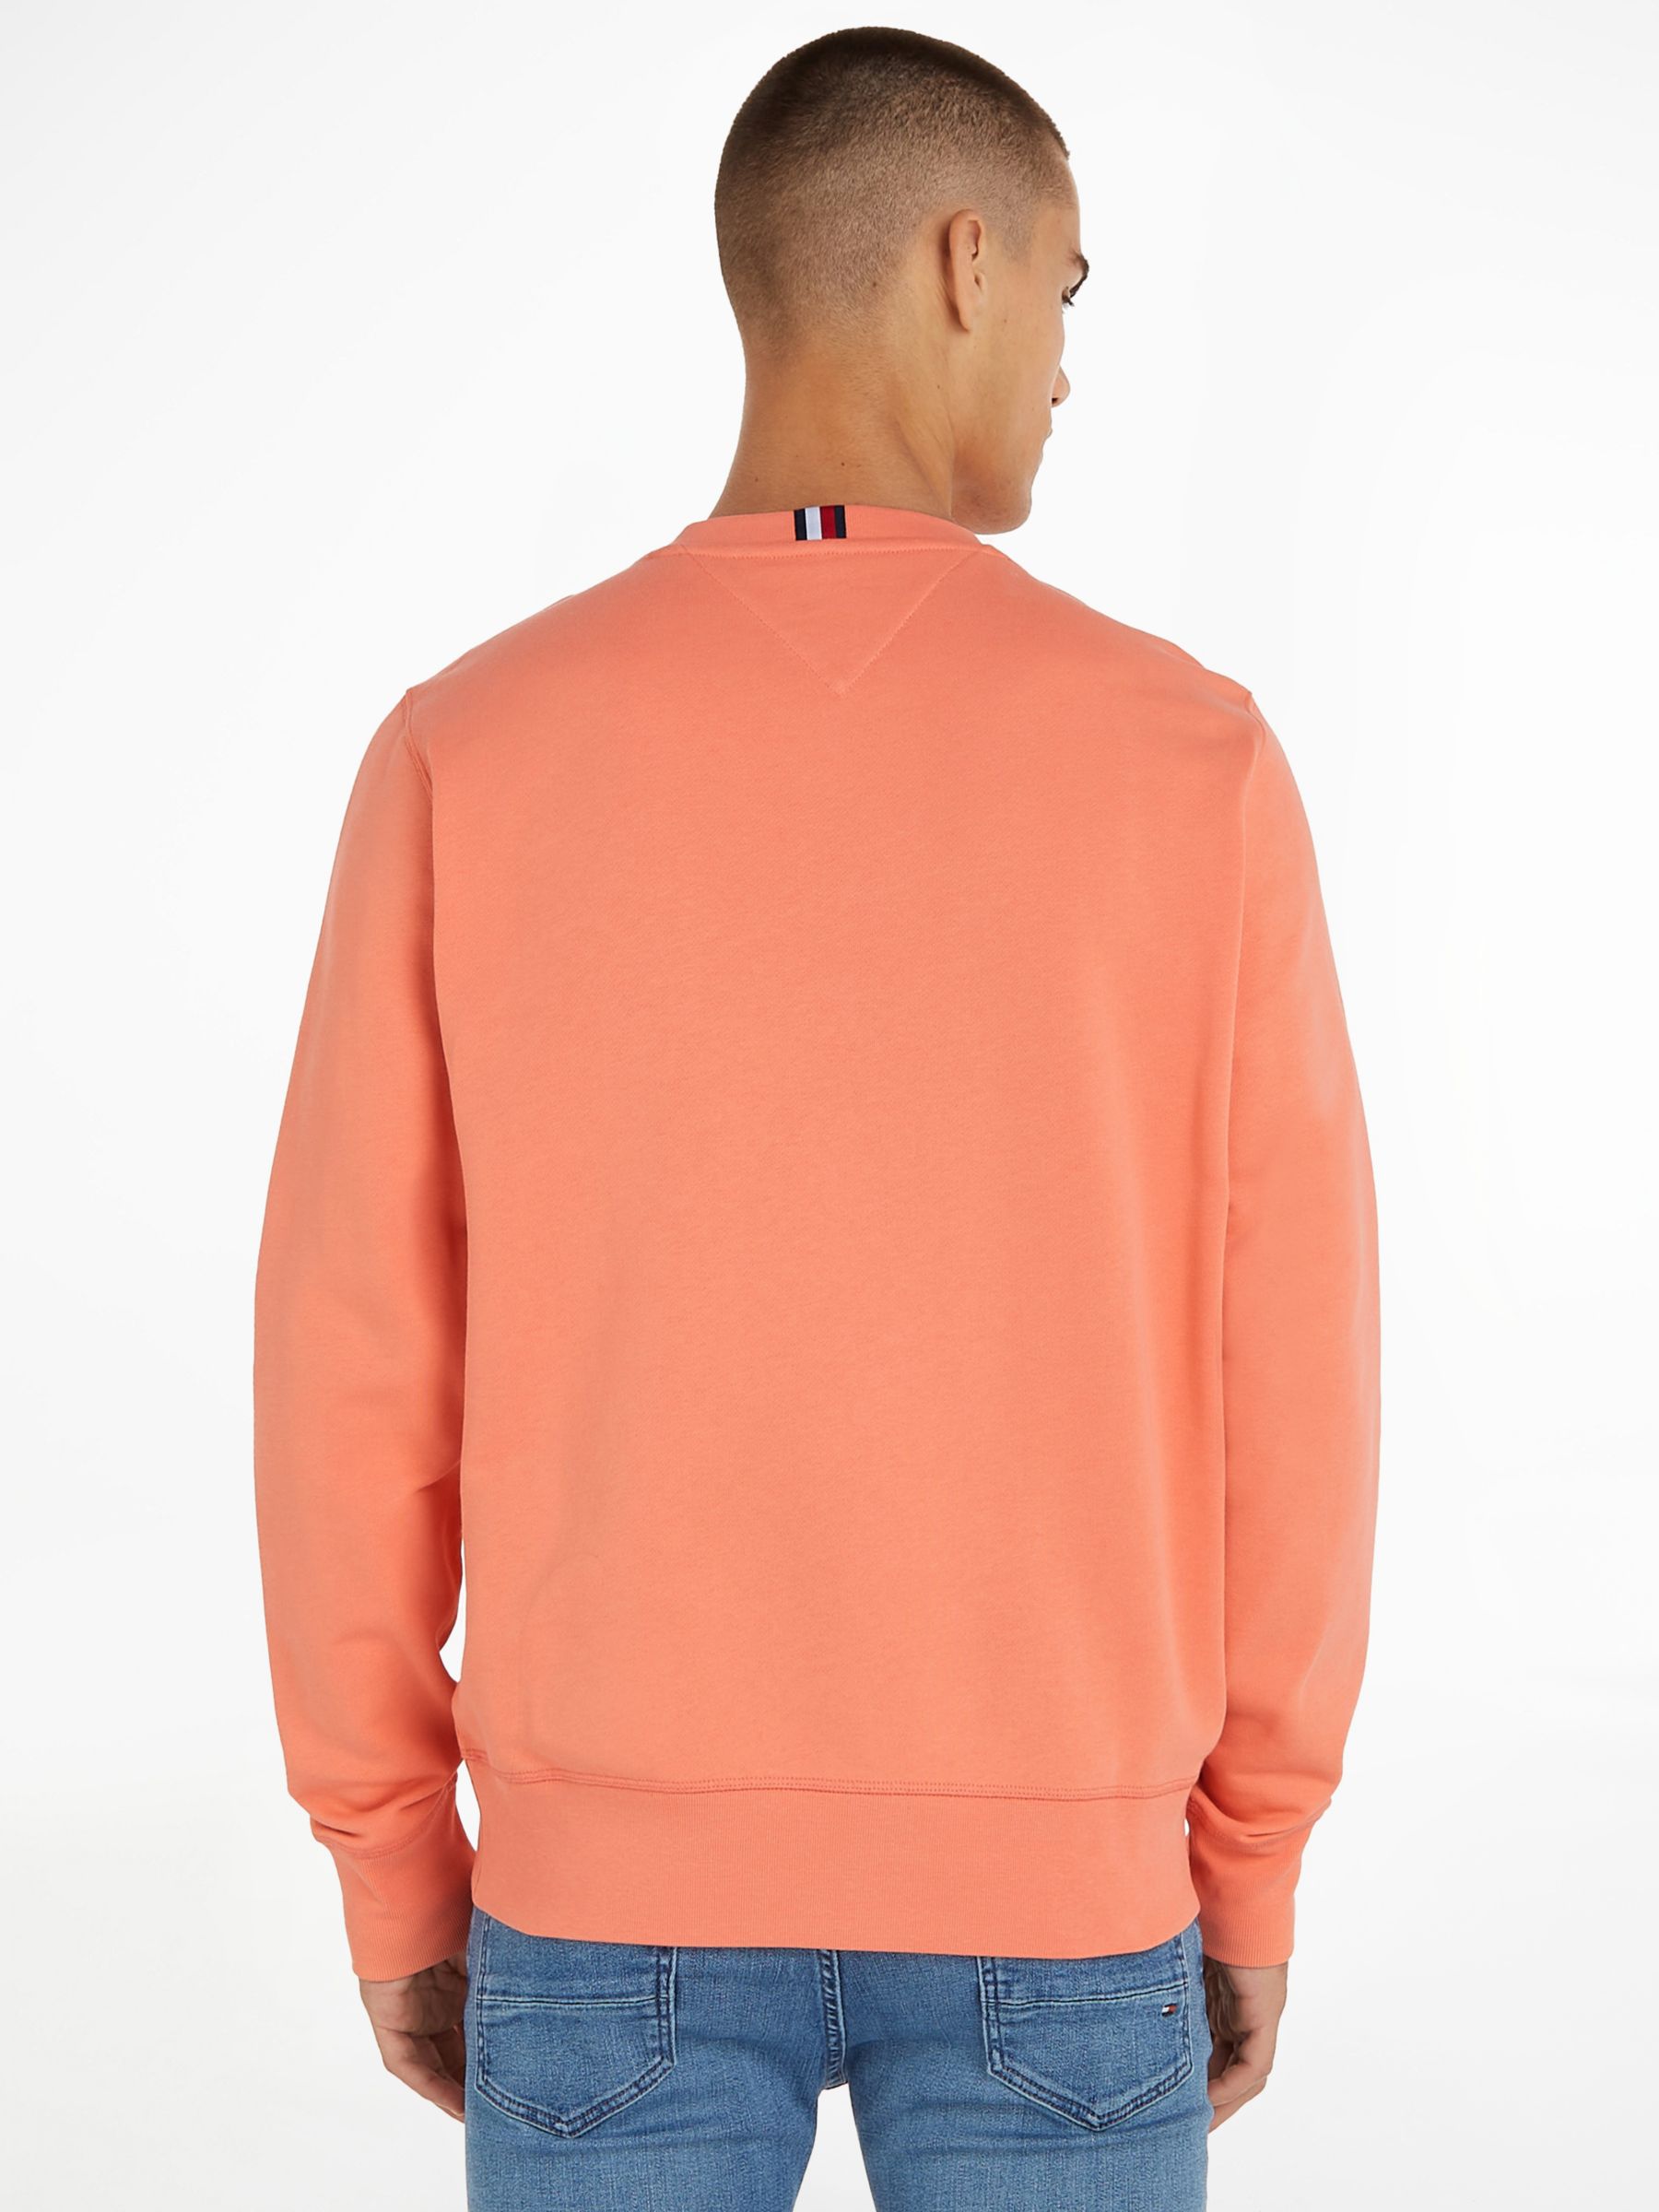 Tommy Hilfiger Women's Size Medium T-Shirt Peach Colored Crew Neck 100%  Cotton